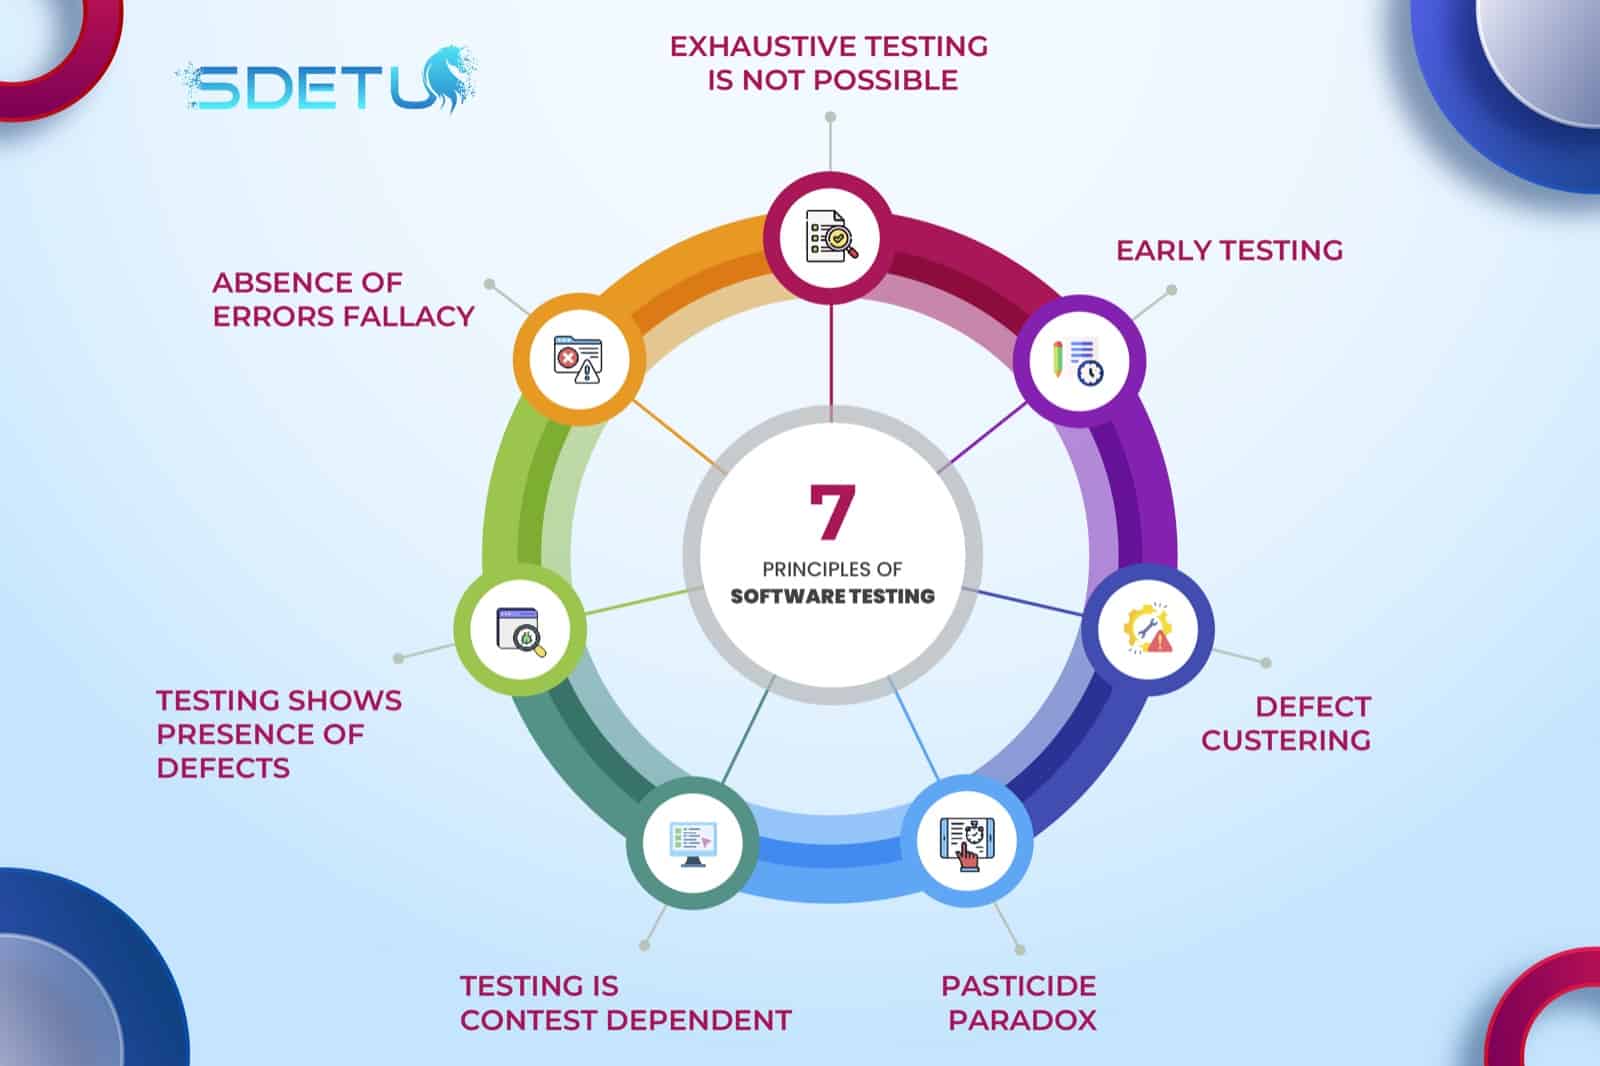 7 Principles of Software Testing